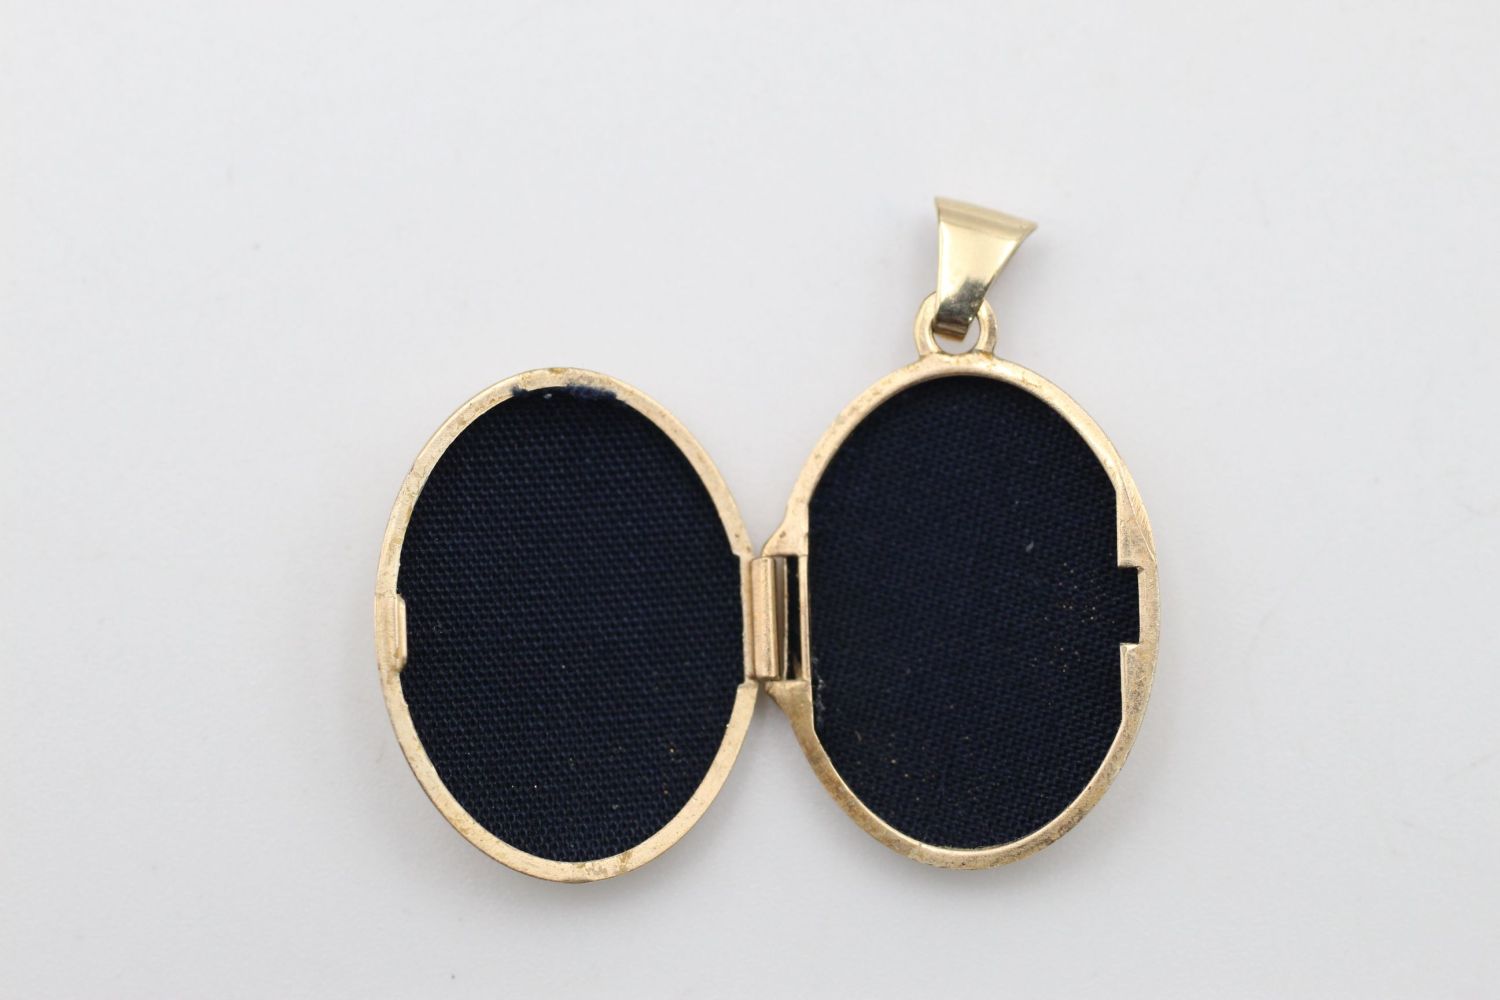 2 x 9ct Gold locket pendants inc. gemstone, mum 3.2 grams gross - Image 6 of 7